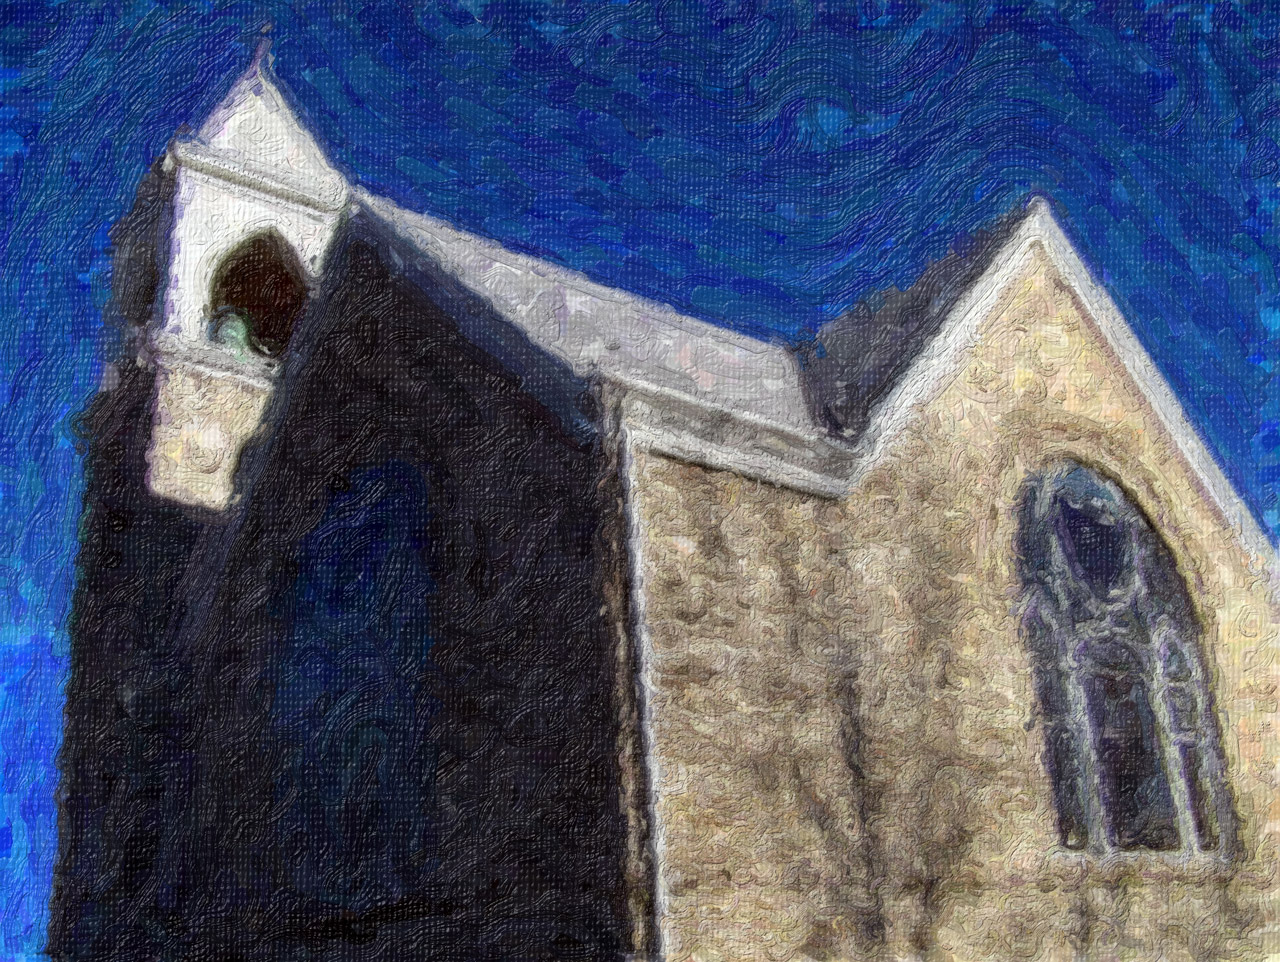 Church Painting